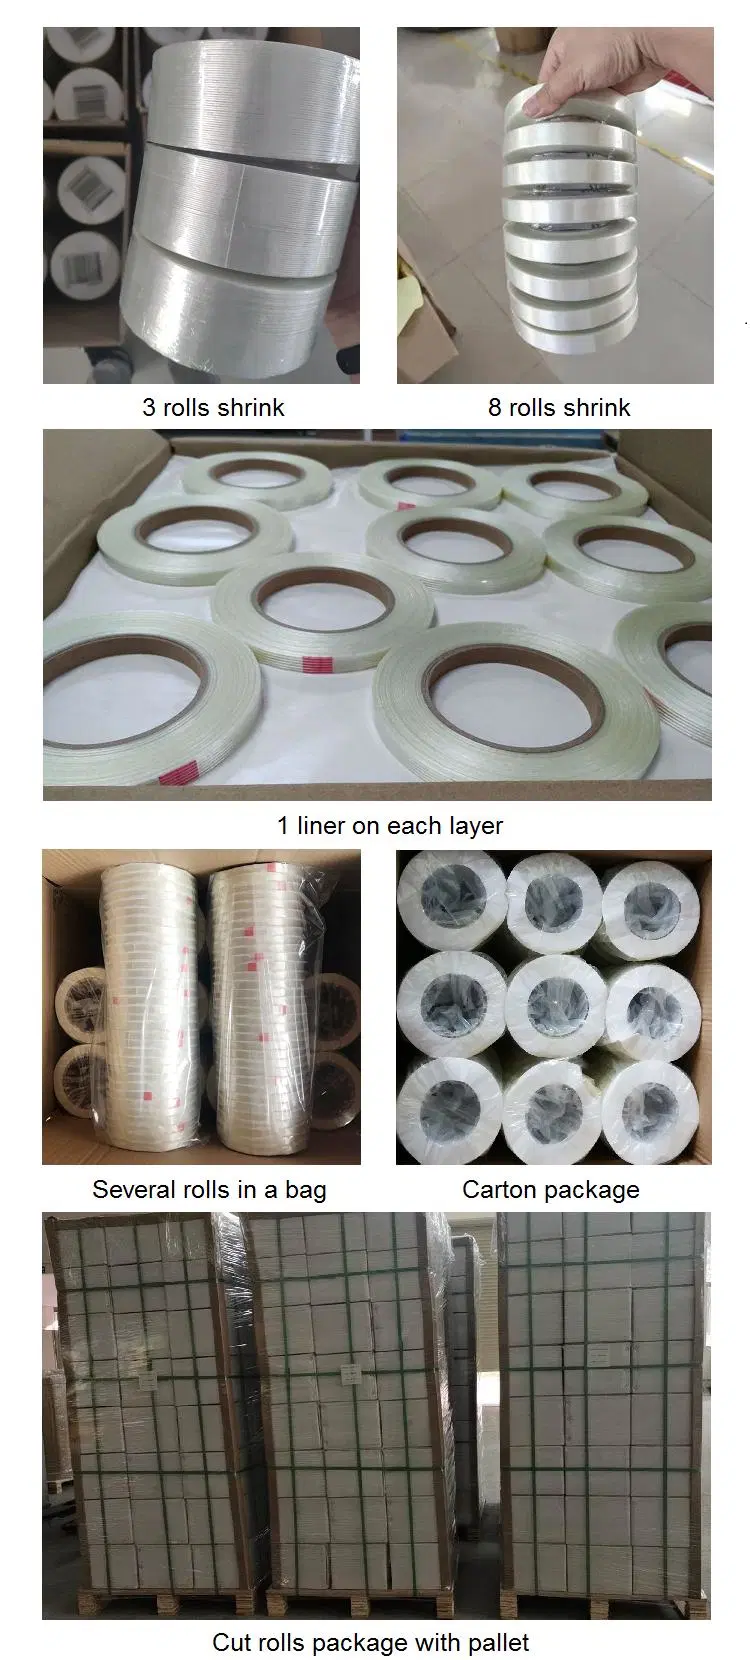 Clear Custom Home Appliance Polypropylene Fiberglass Reinforced Packaging Packing Filament Adhesive Tape